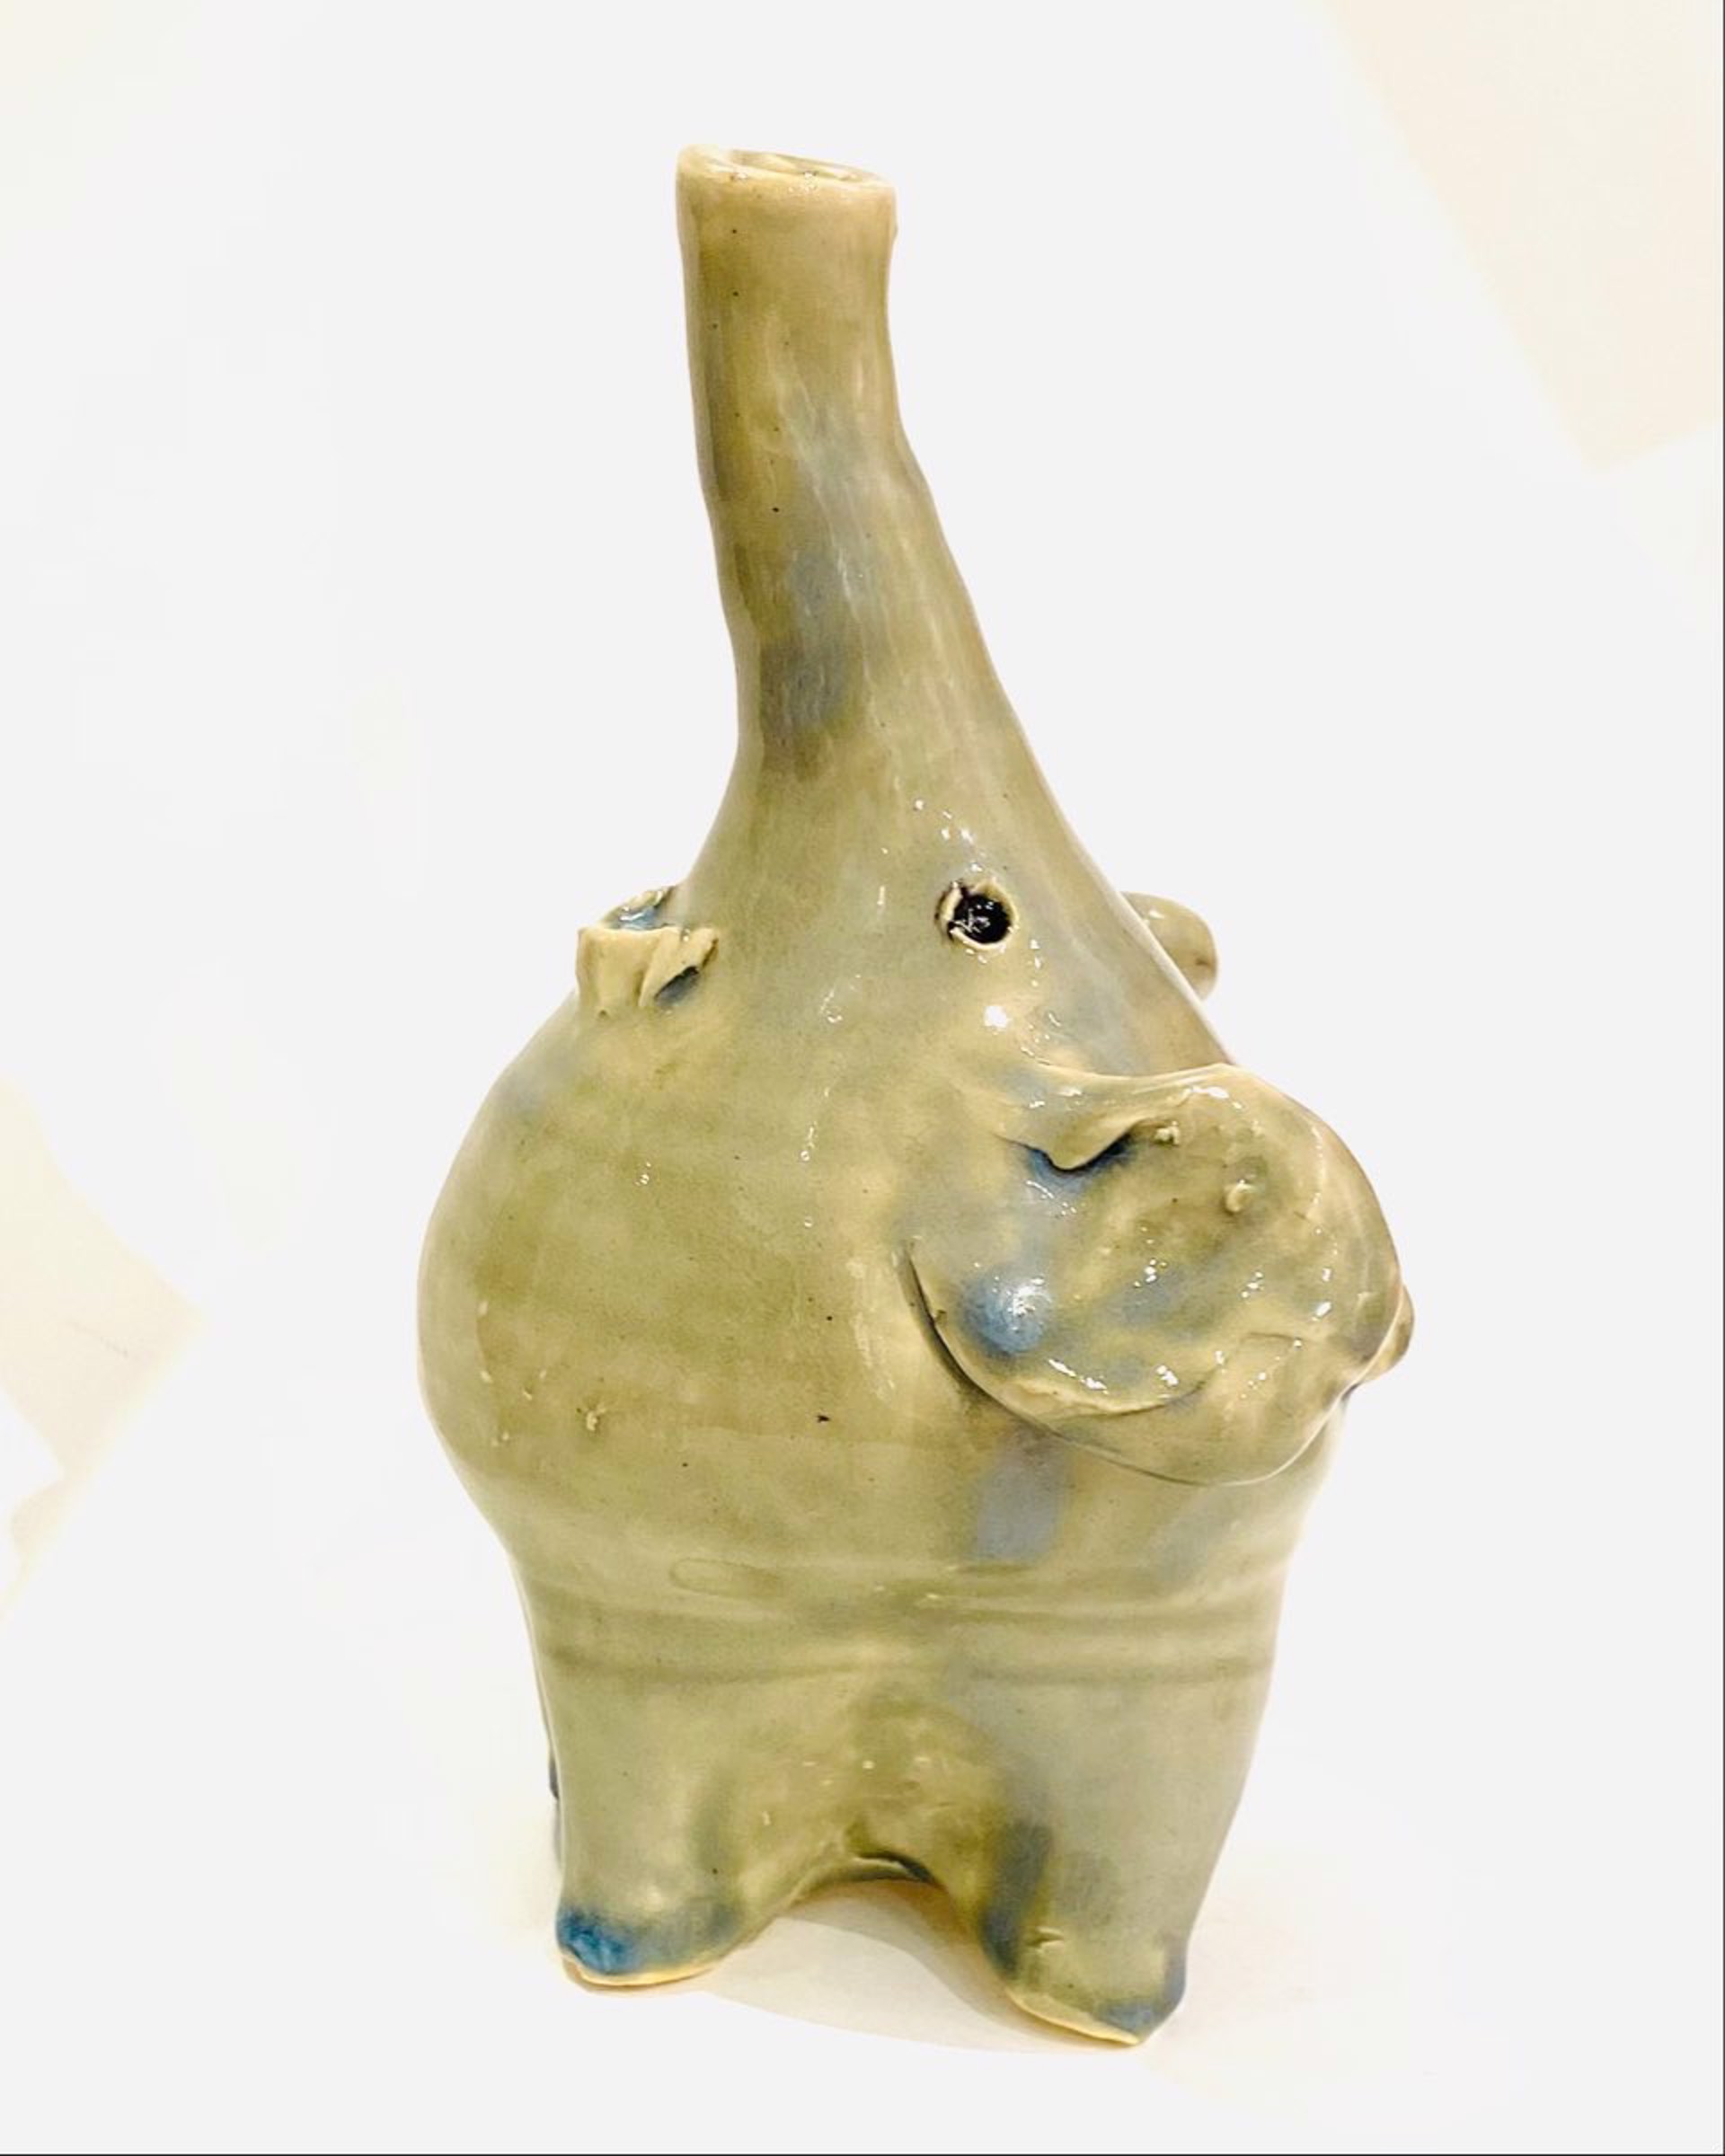 KK22-104  "Horton"' Elephant Vase by Kate Krause